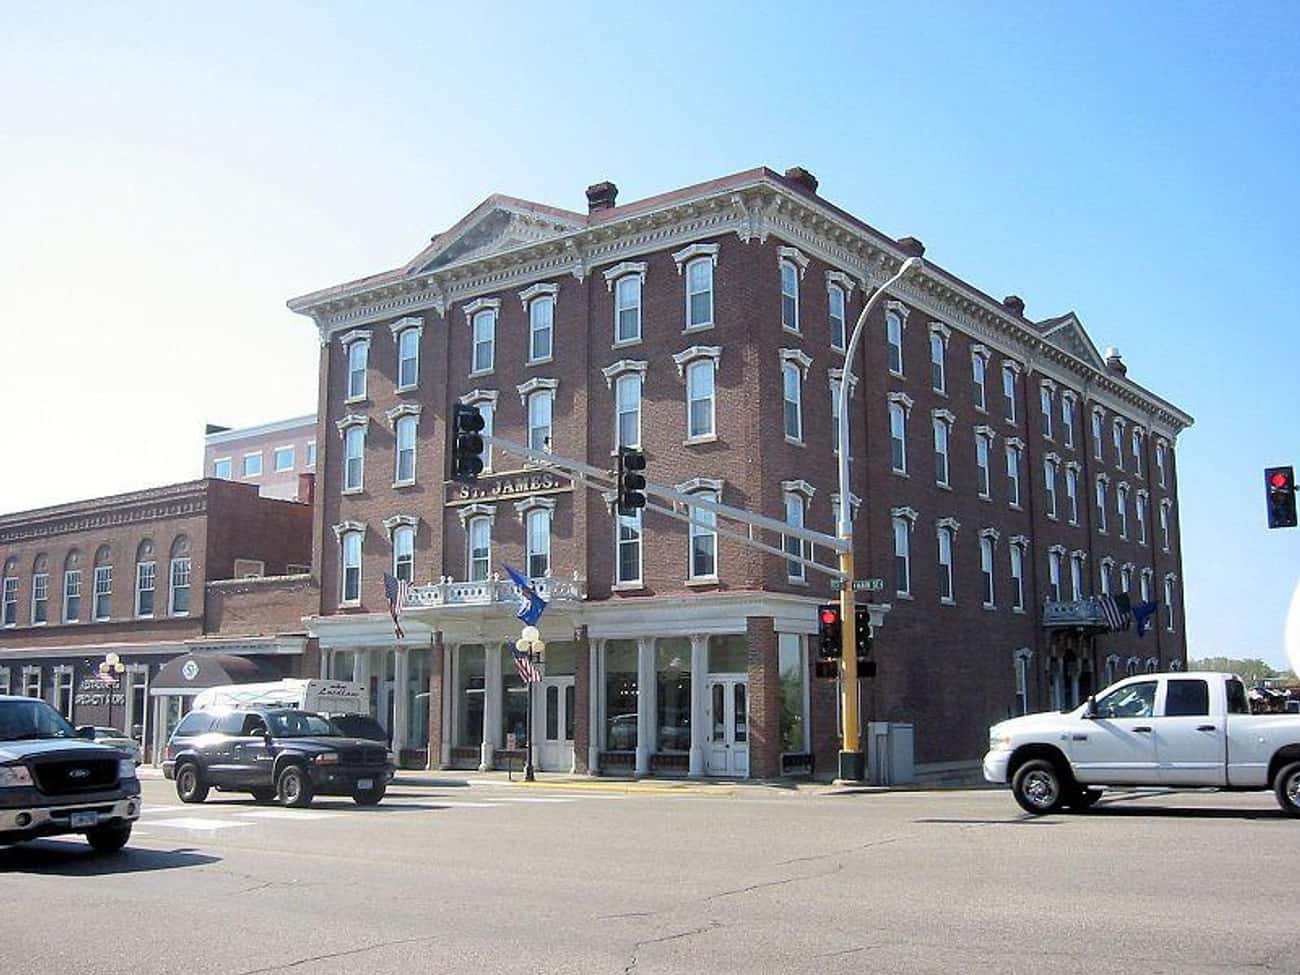 Minnesota: The St. James Hotel